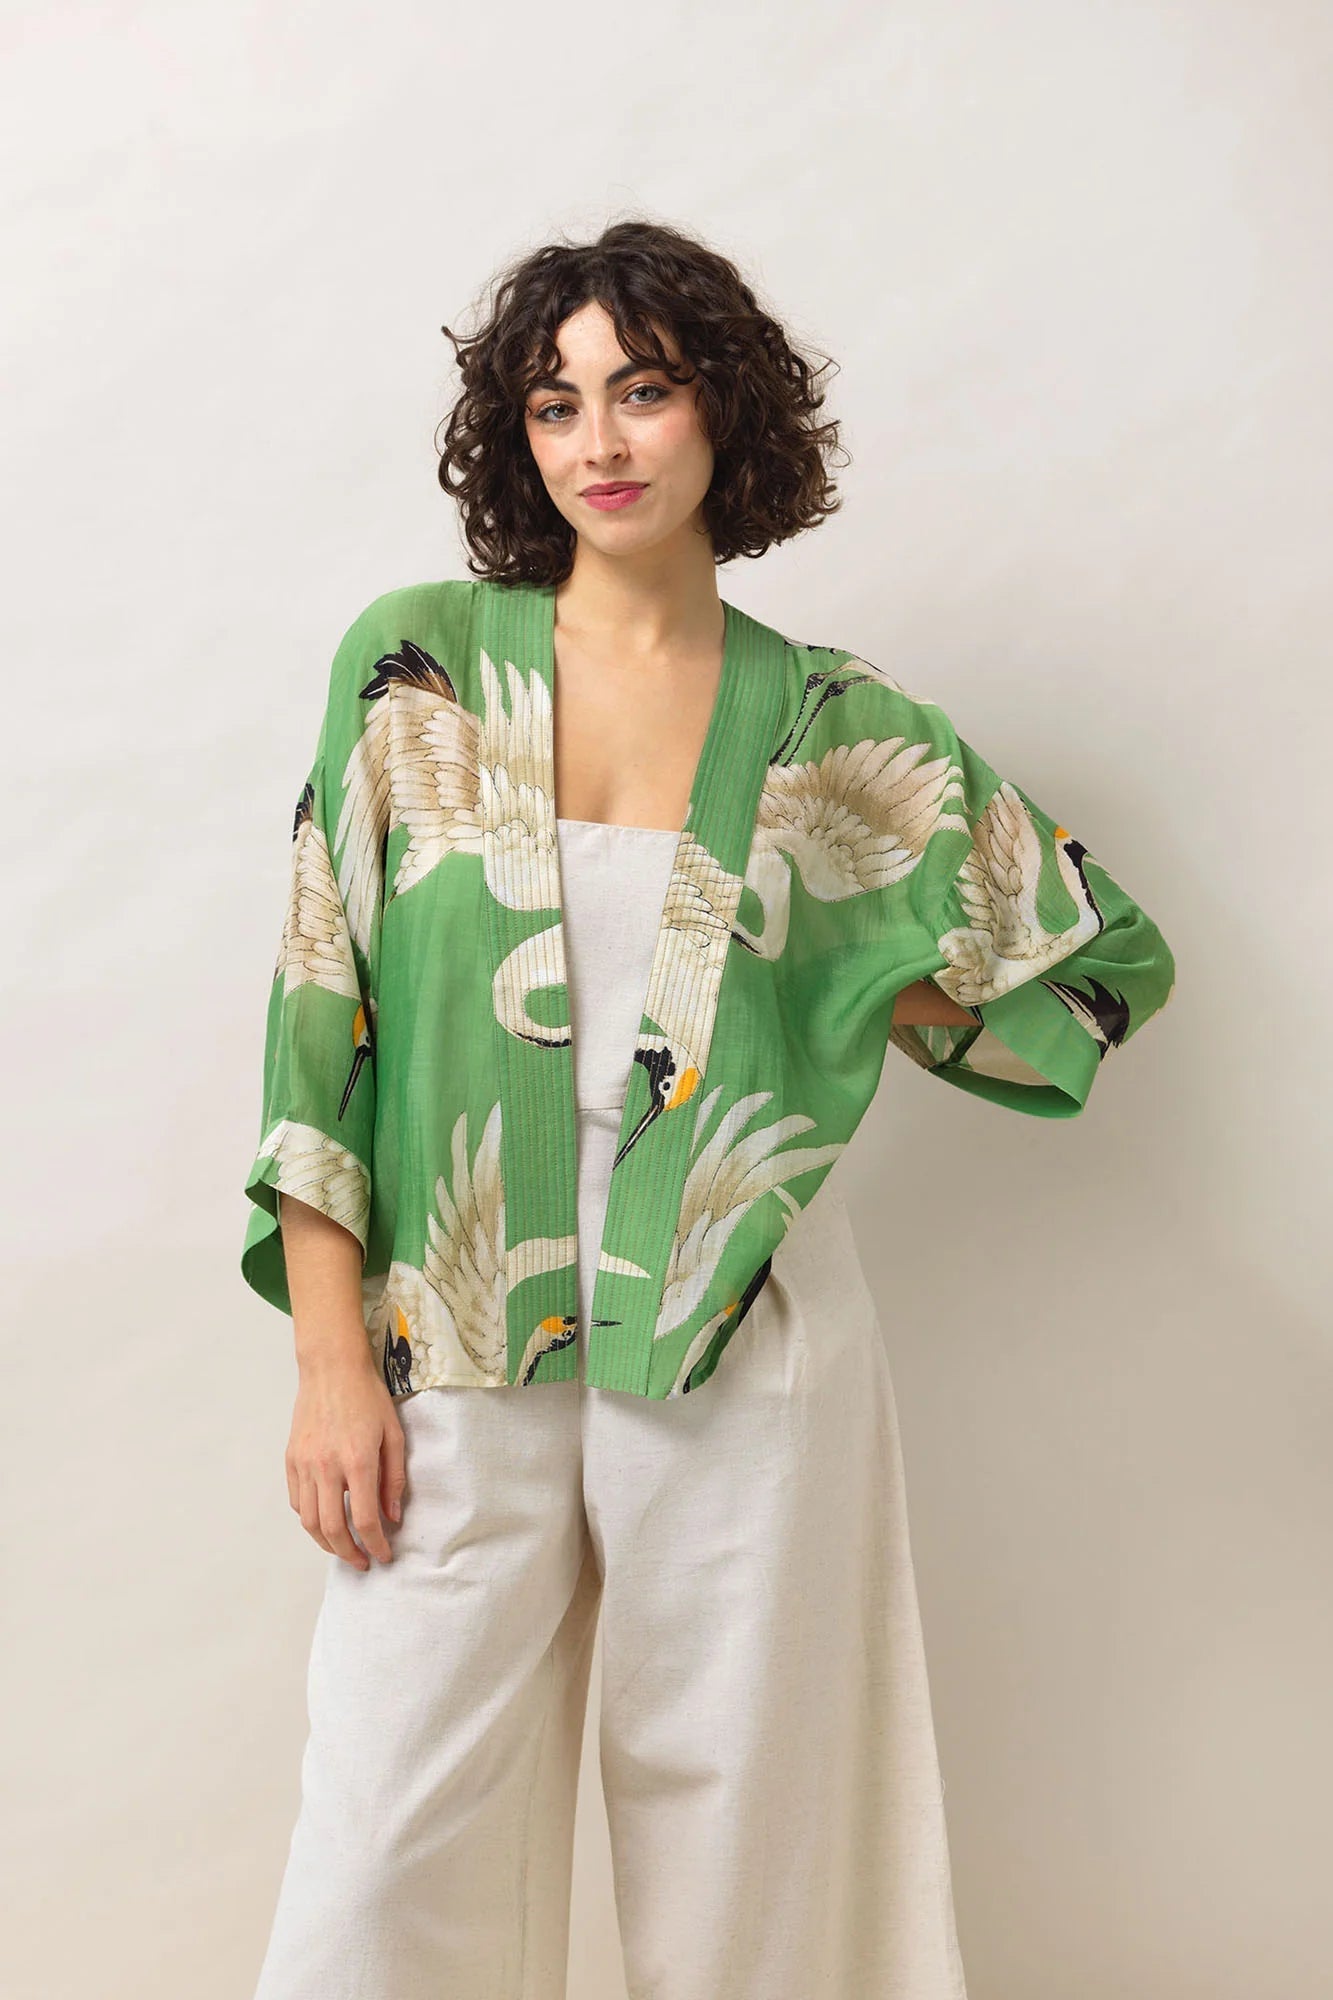 Pea Green Stork Kimono - The Nancy Smillie Shop - Art, Jewellery & Designer Gifts Glasgow